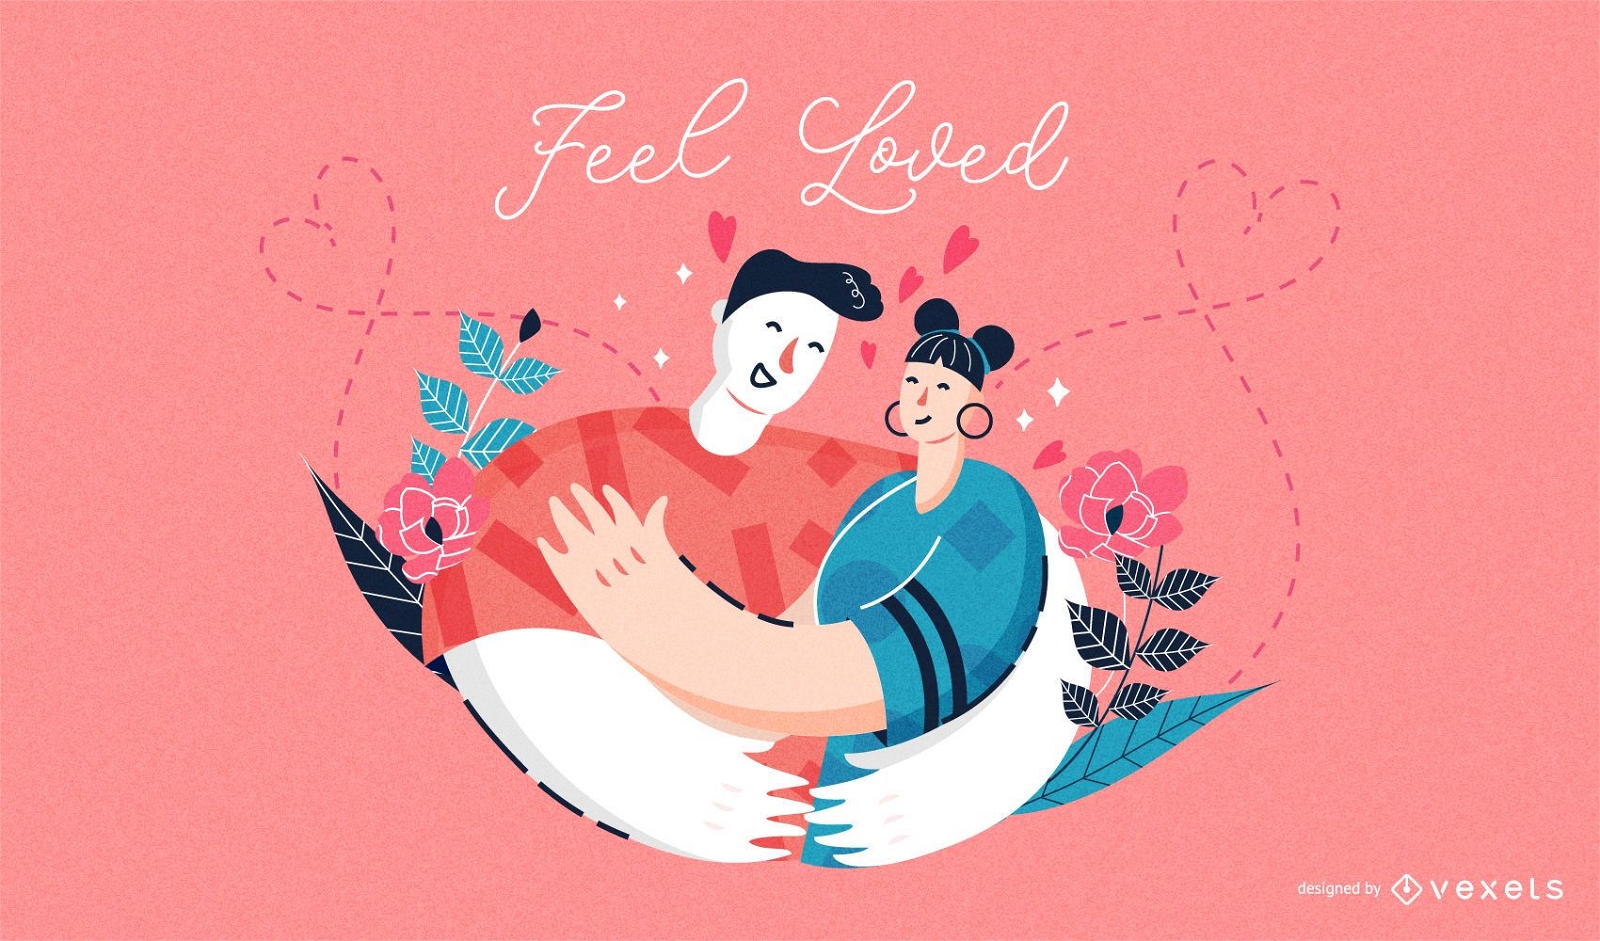 Feel loved valentines illustration